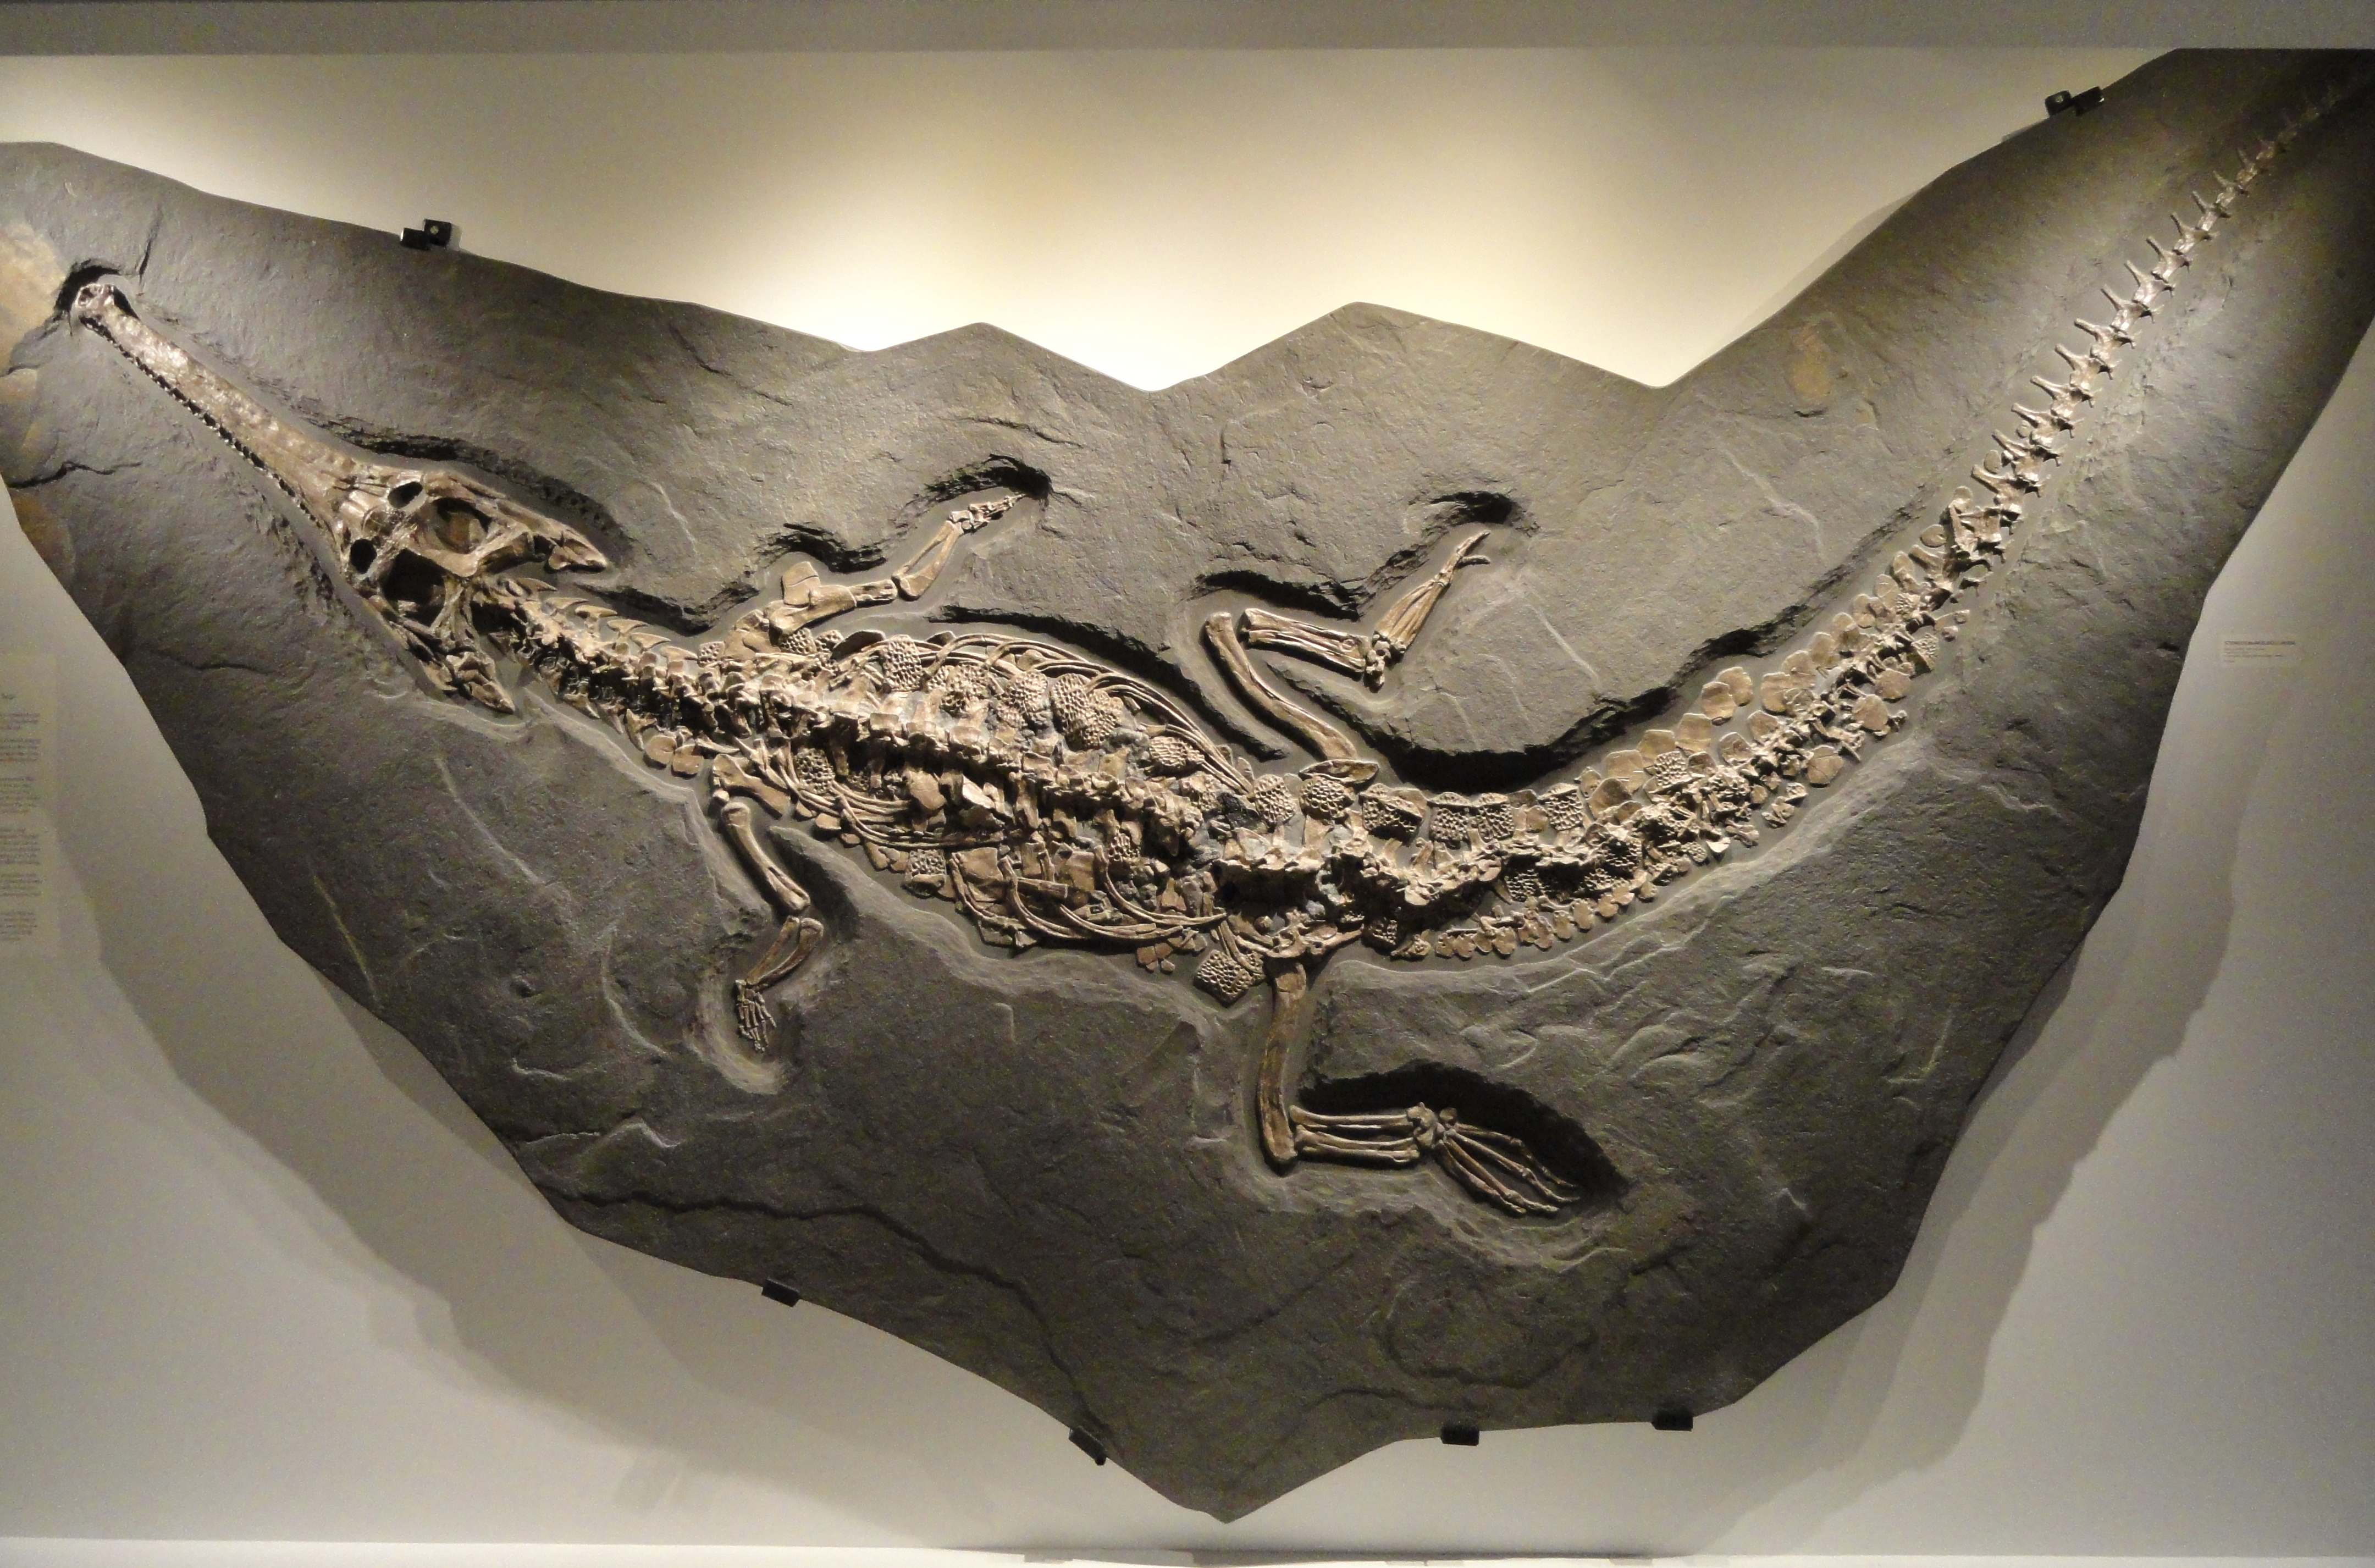 steneosaurus_bollensis_view_1_early_jurassic_toarcian_age_posidonia_shale.JPG